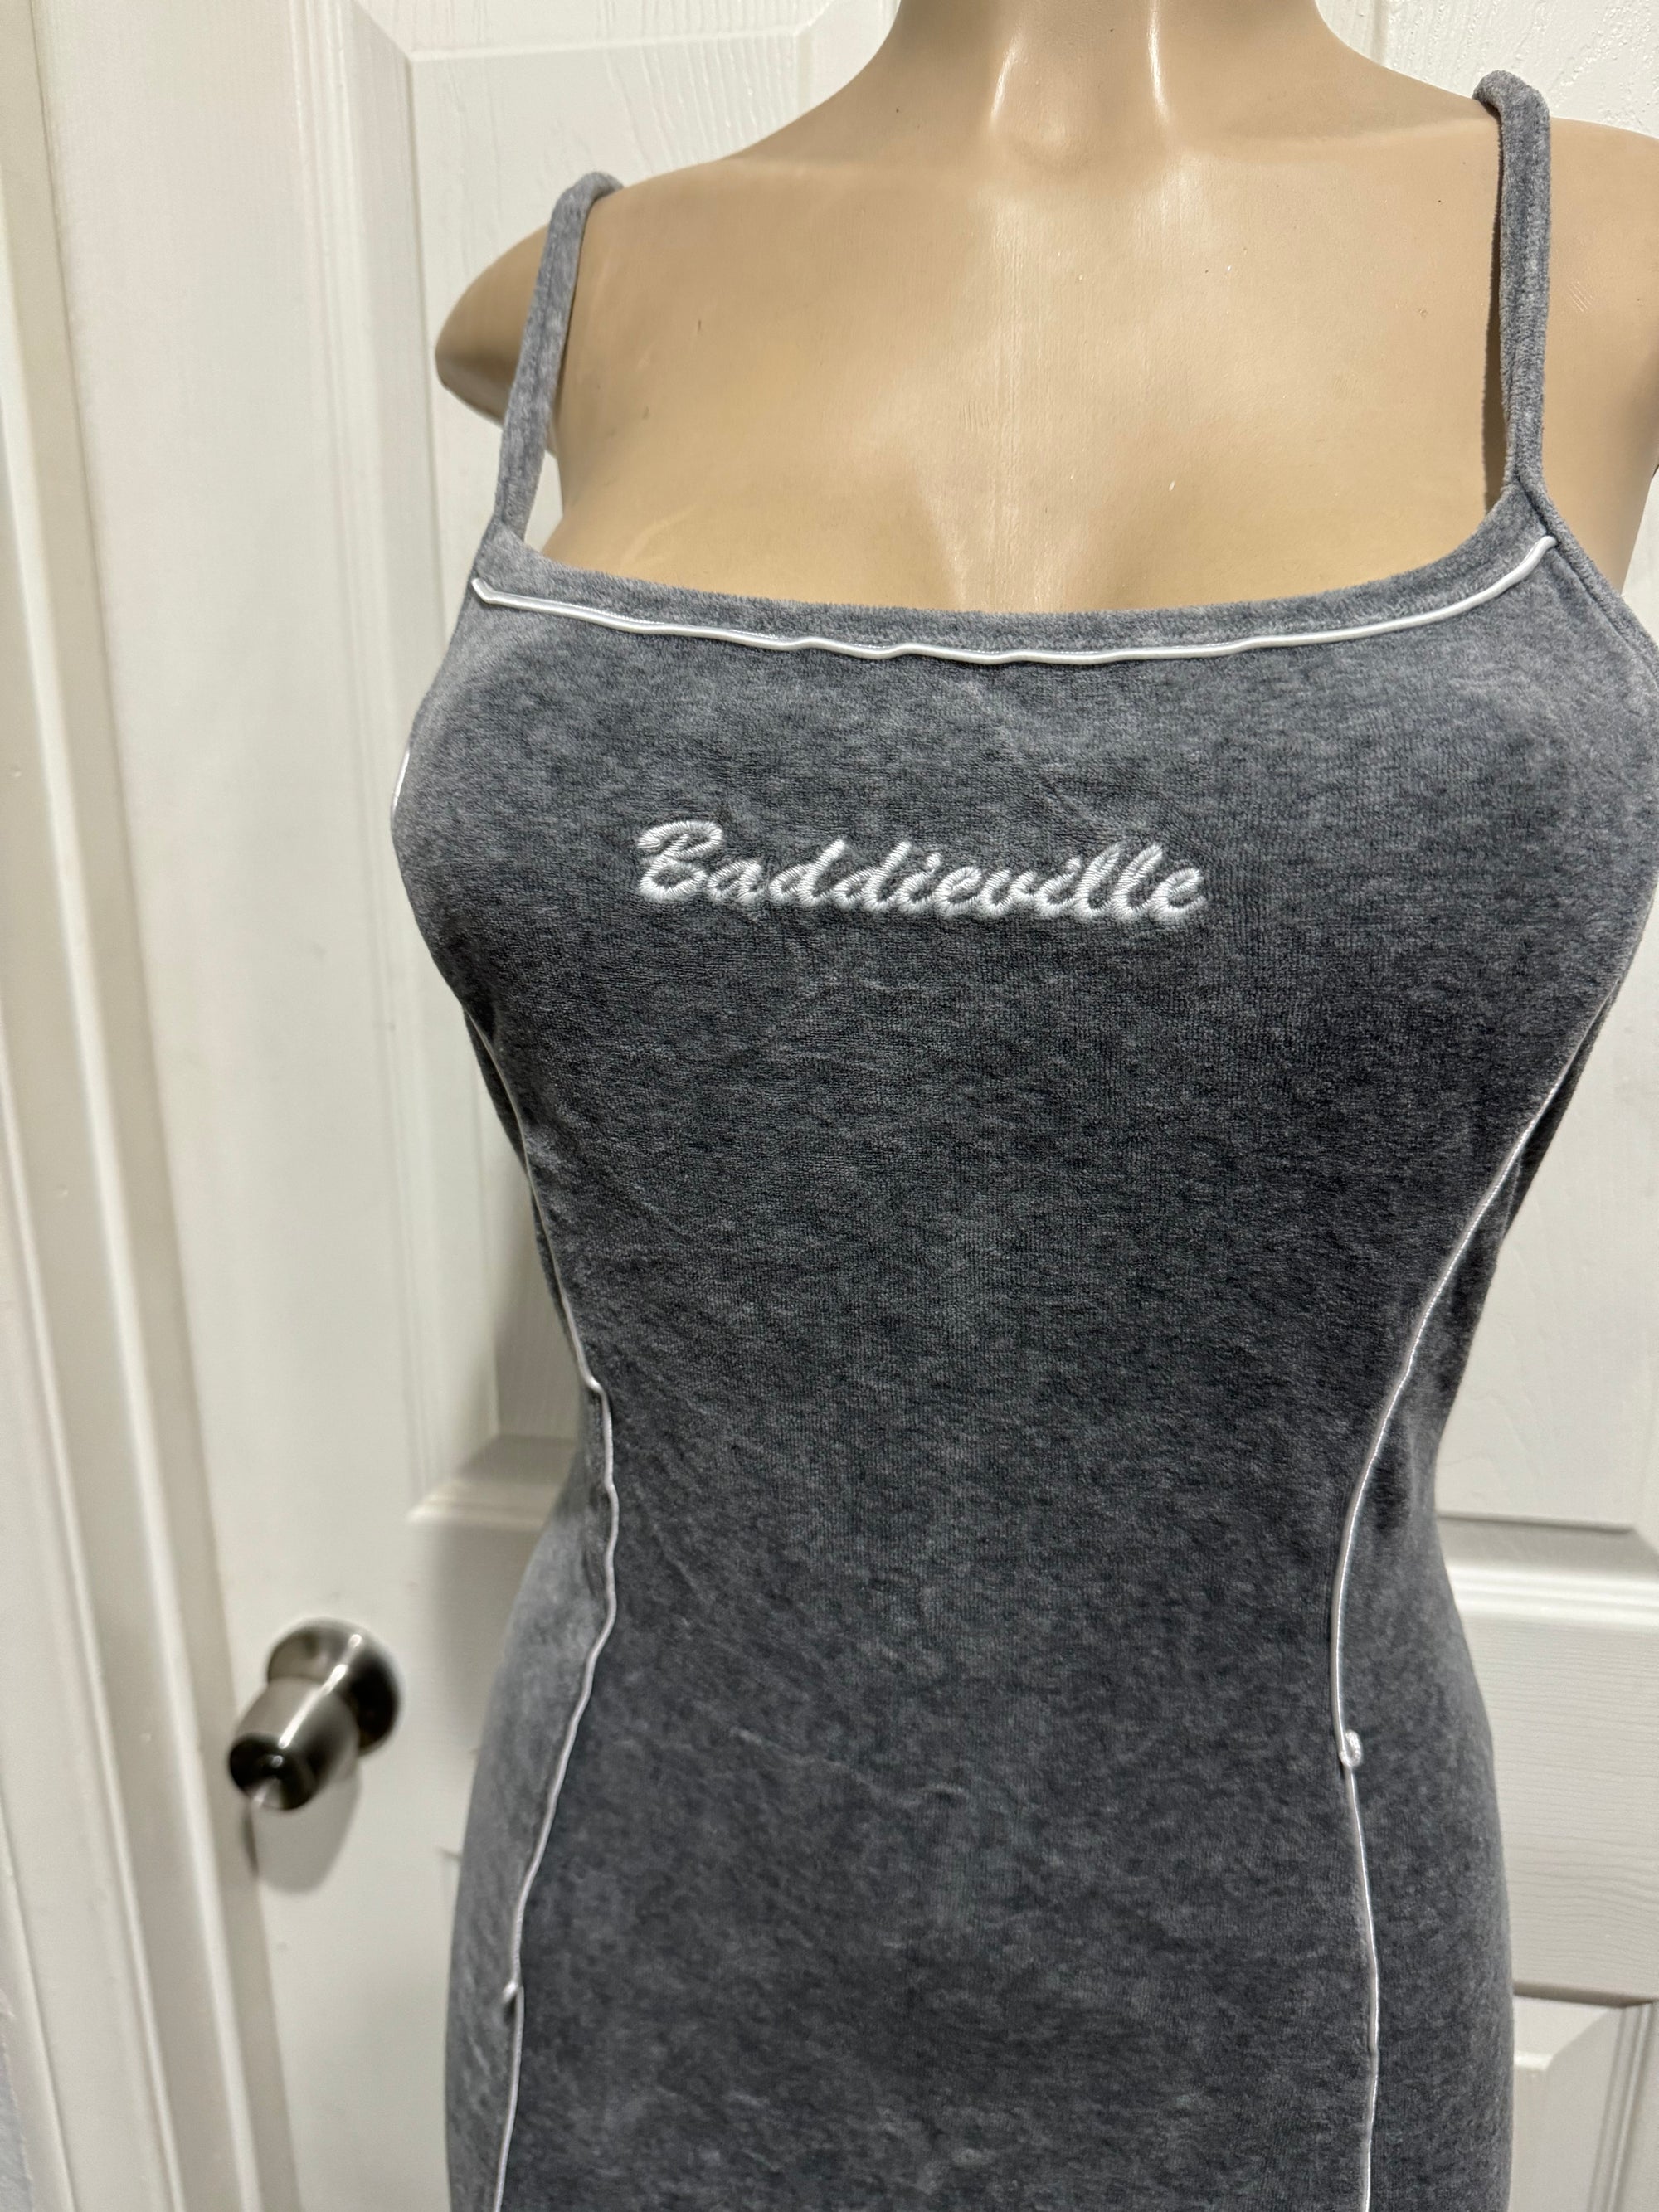 Baddieville dress (medium)